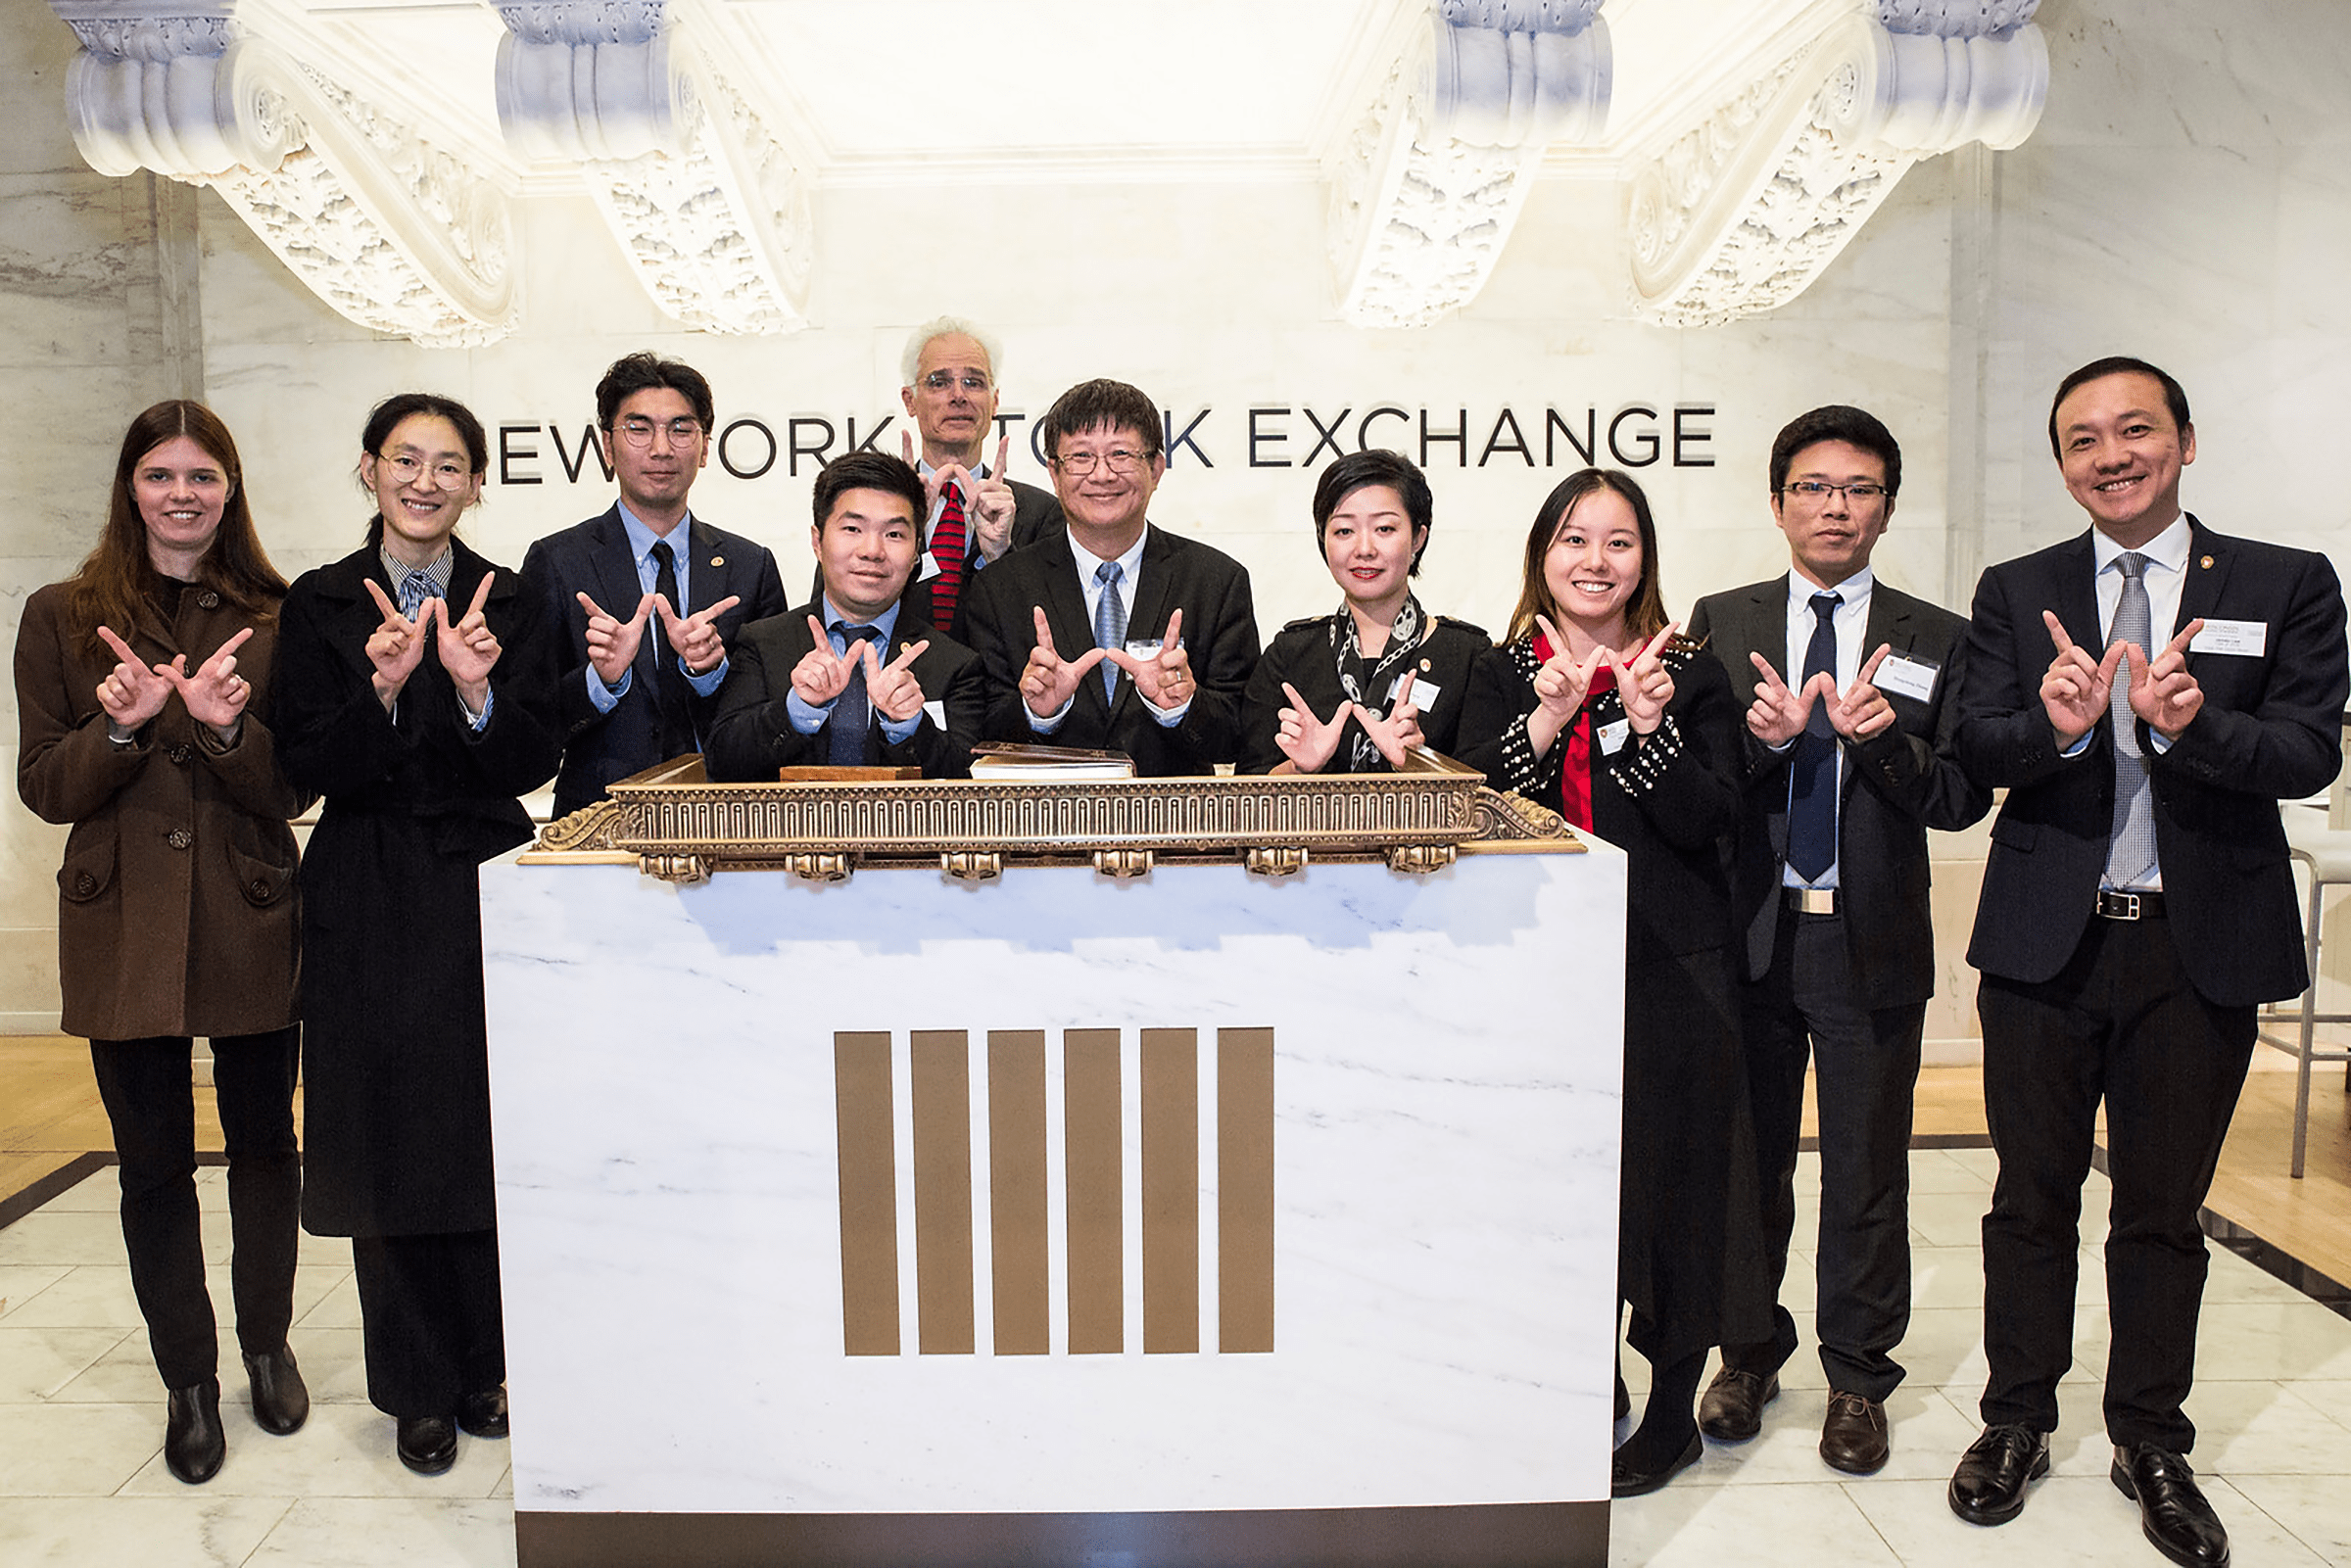 Stock exchange group photo